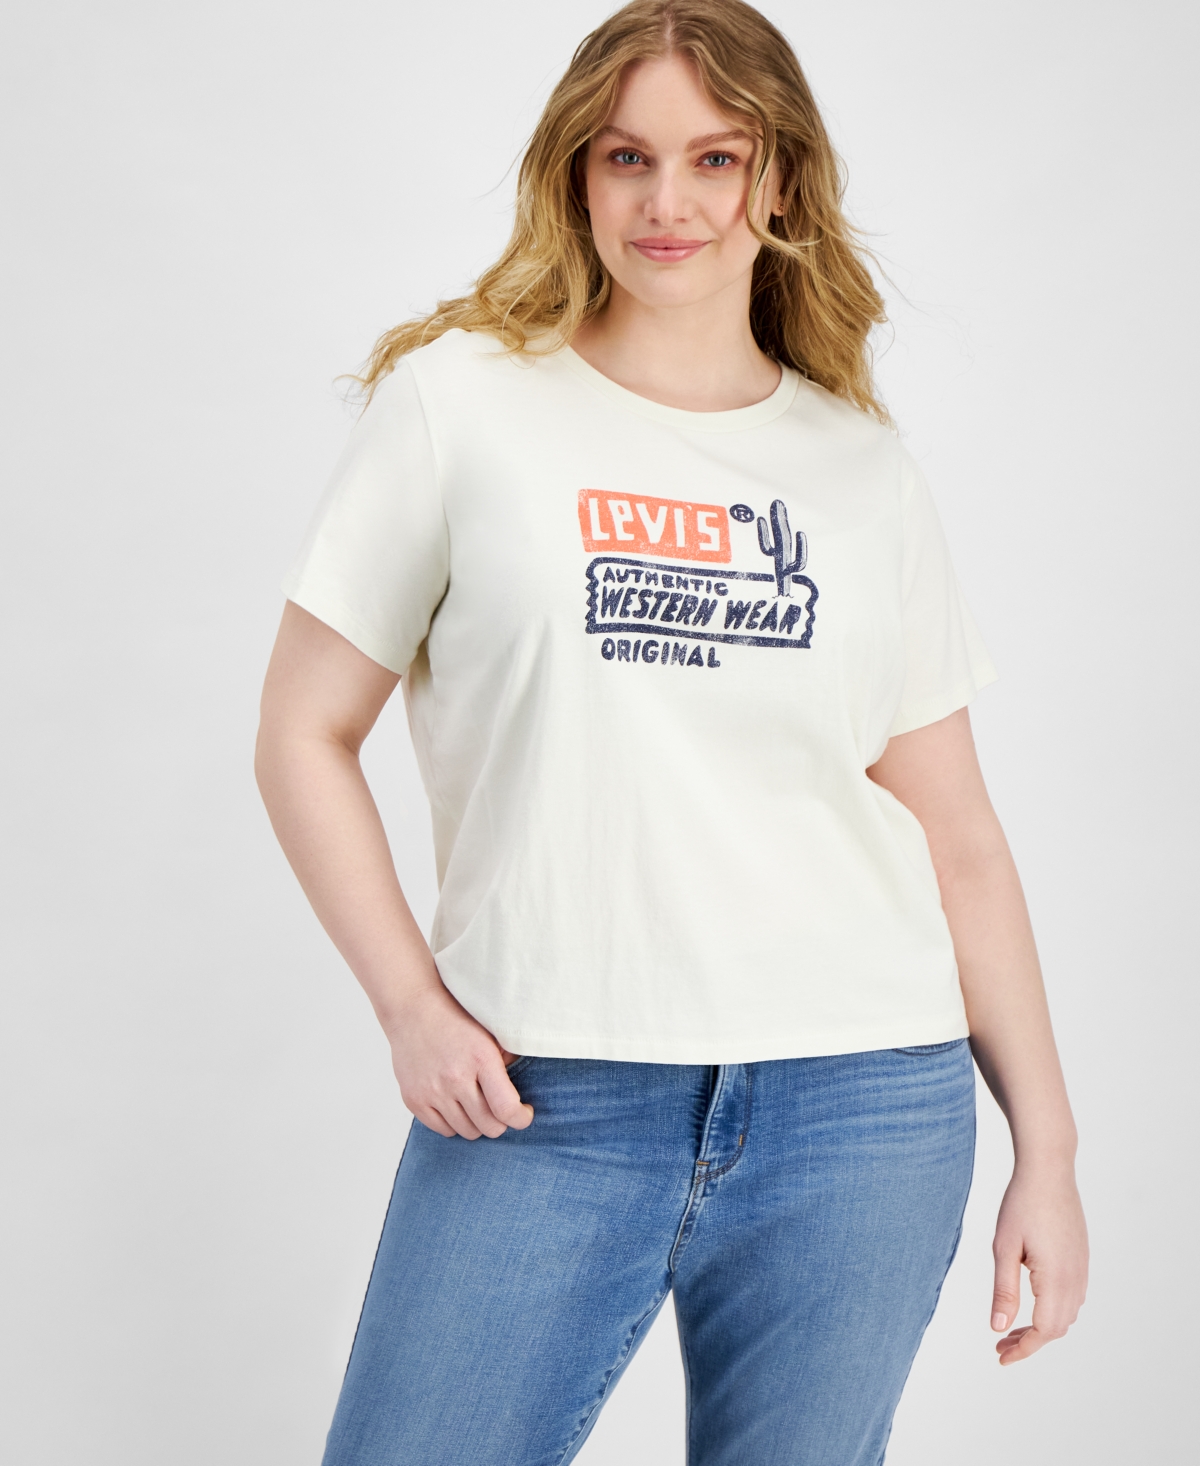 Levi's Plus Size Graphic Authentic Cotton Short-sleeve T-shirt In Authentic Western Wear Egret